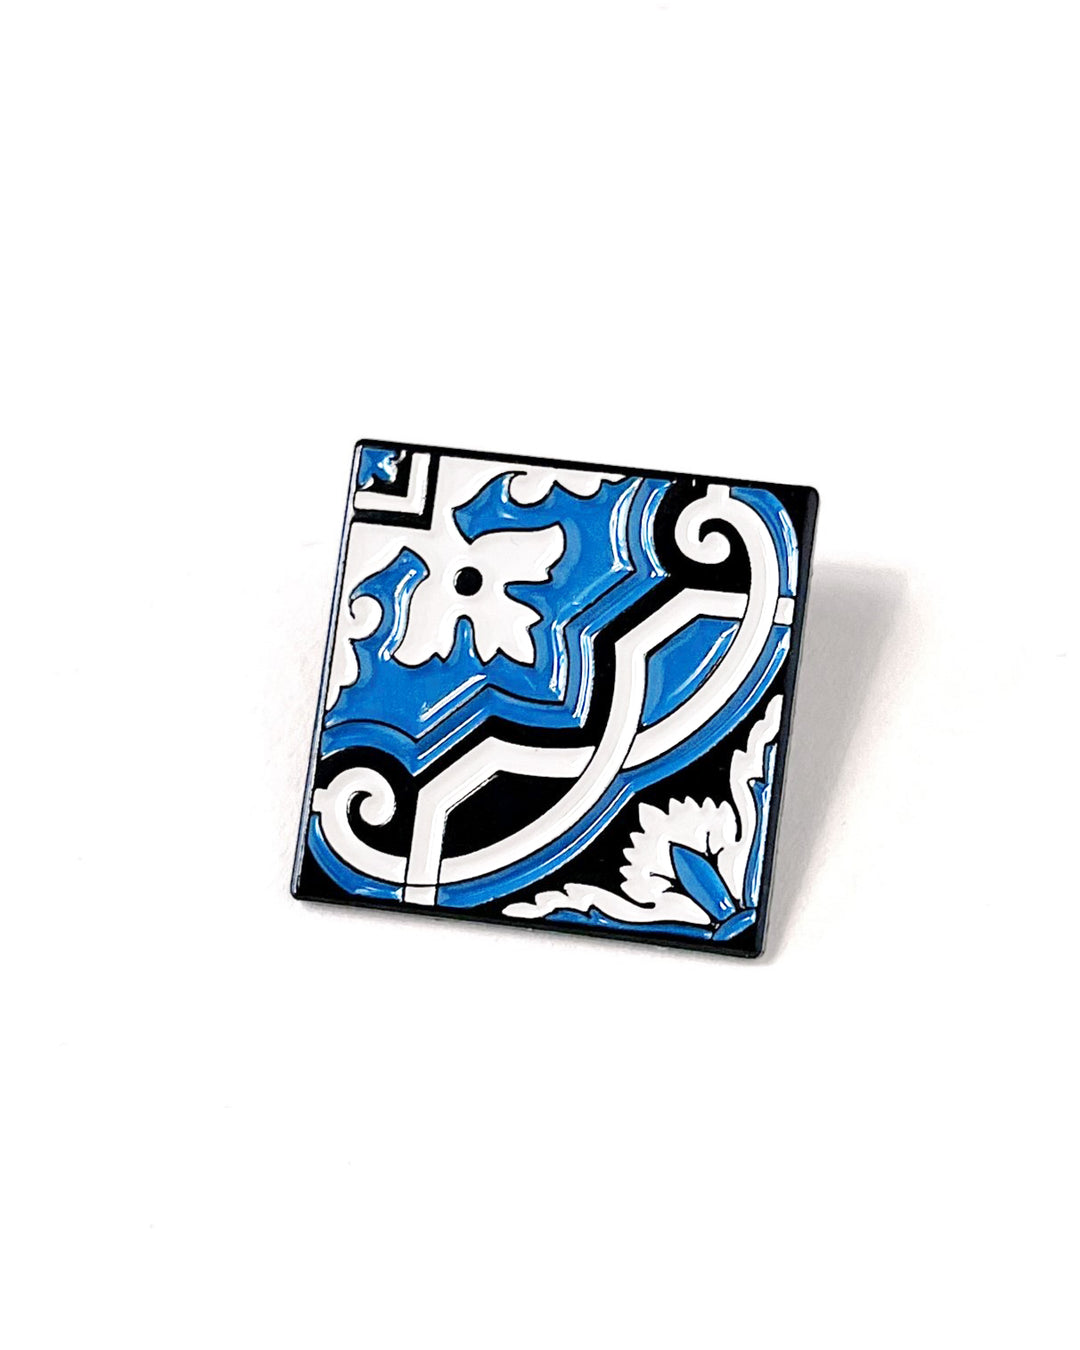 Needle Minder Portuguese Tile Magnet (enamel pin) by Unwind Studio